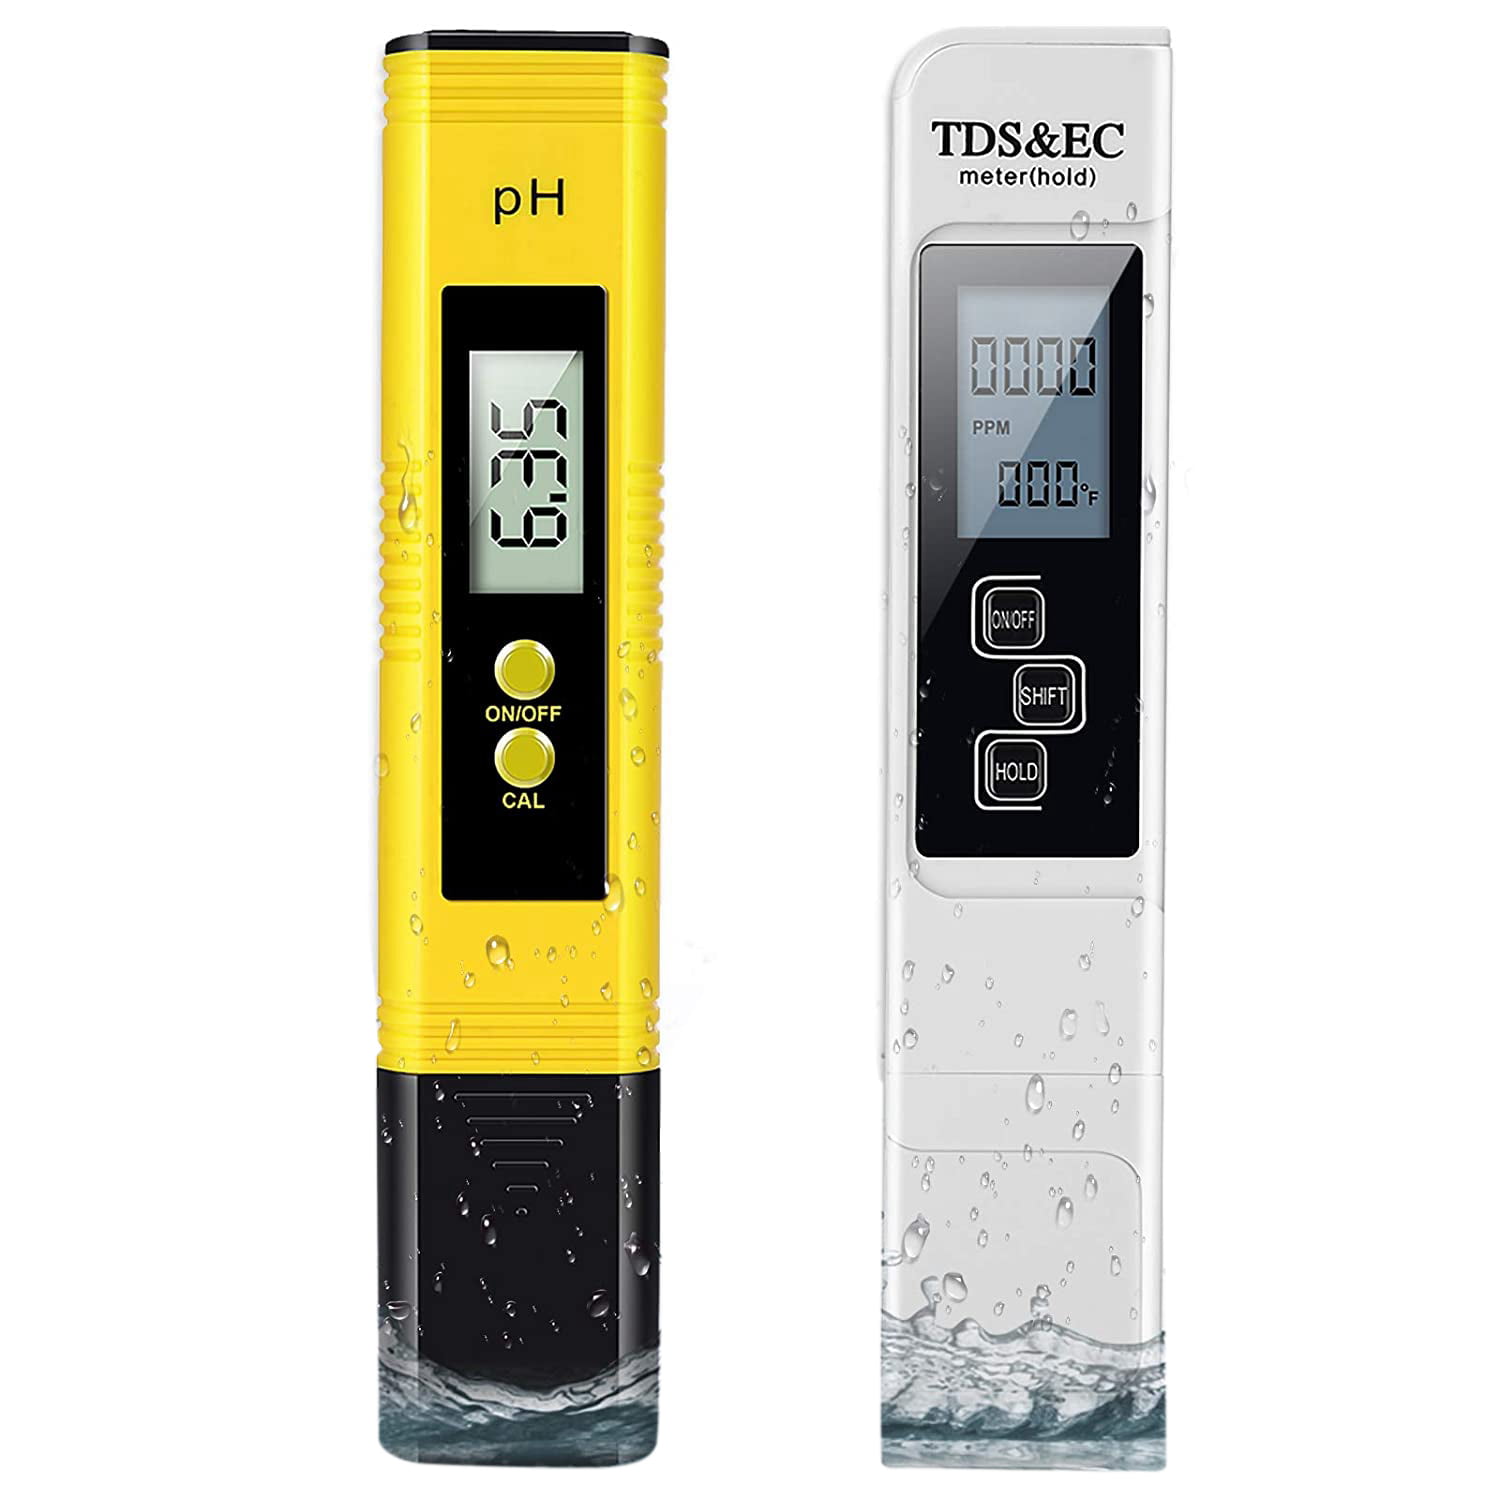 Details about   Water Quality Test Meter Digital Tool TDS&EC Temperature 0-9990 ppm Measurement 